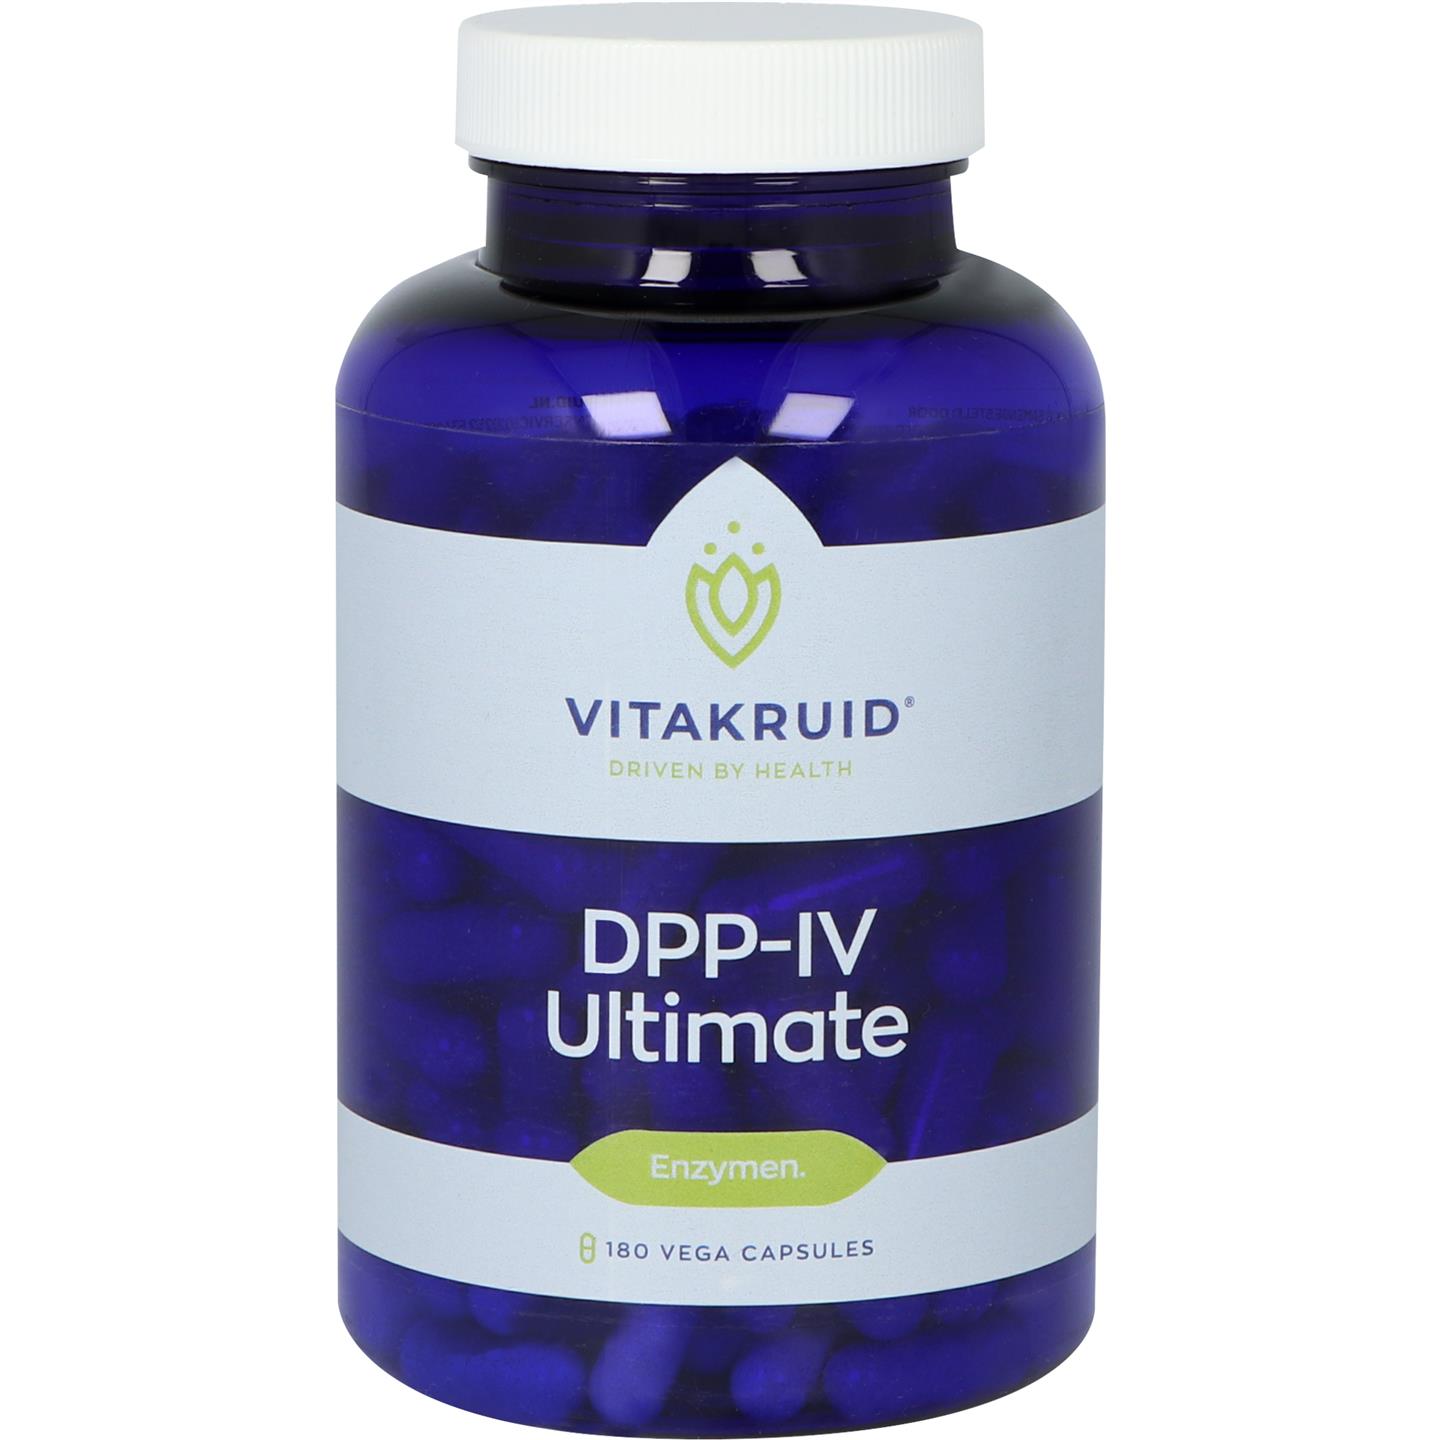 DPP-IV Ultimate